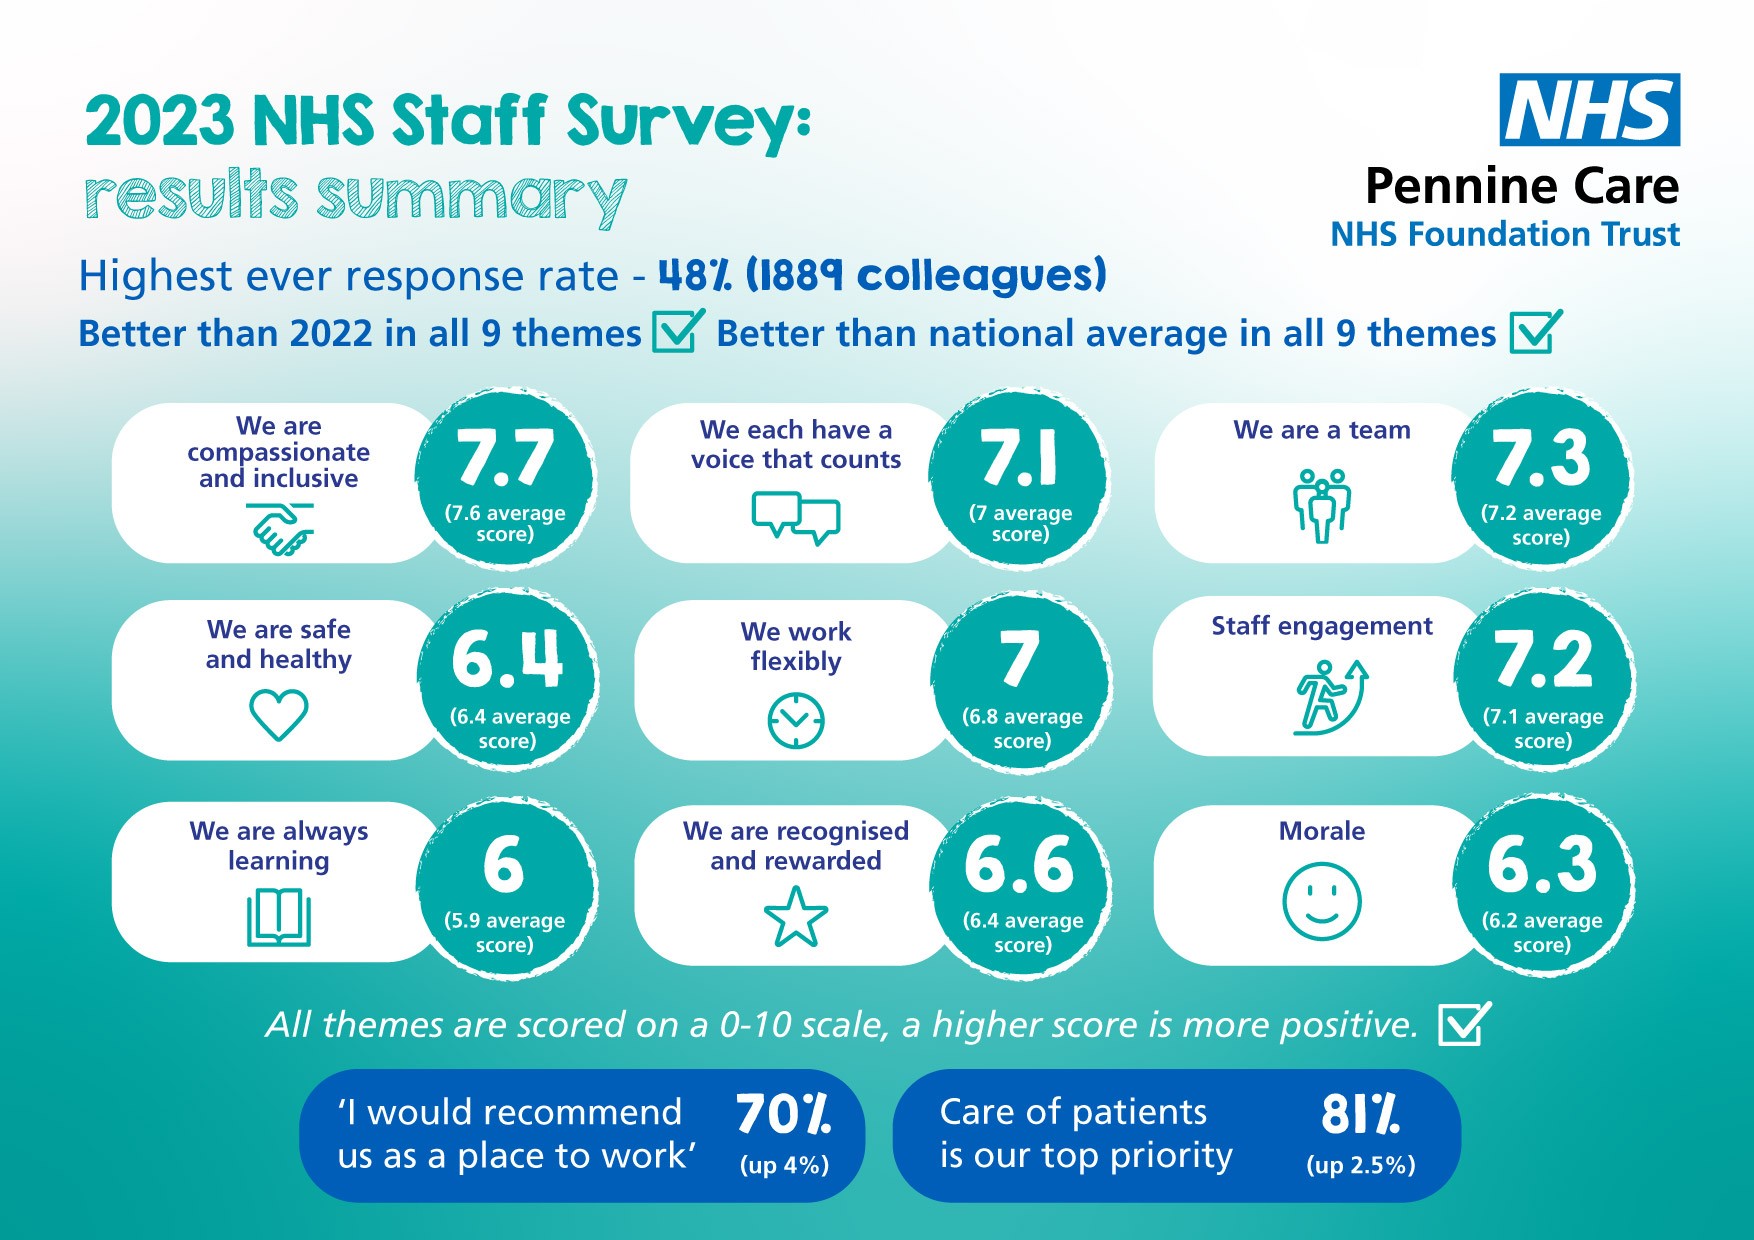 NHS staff survey 2023 summary.jpg